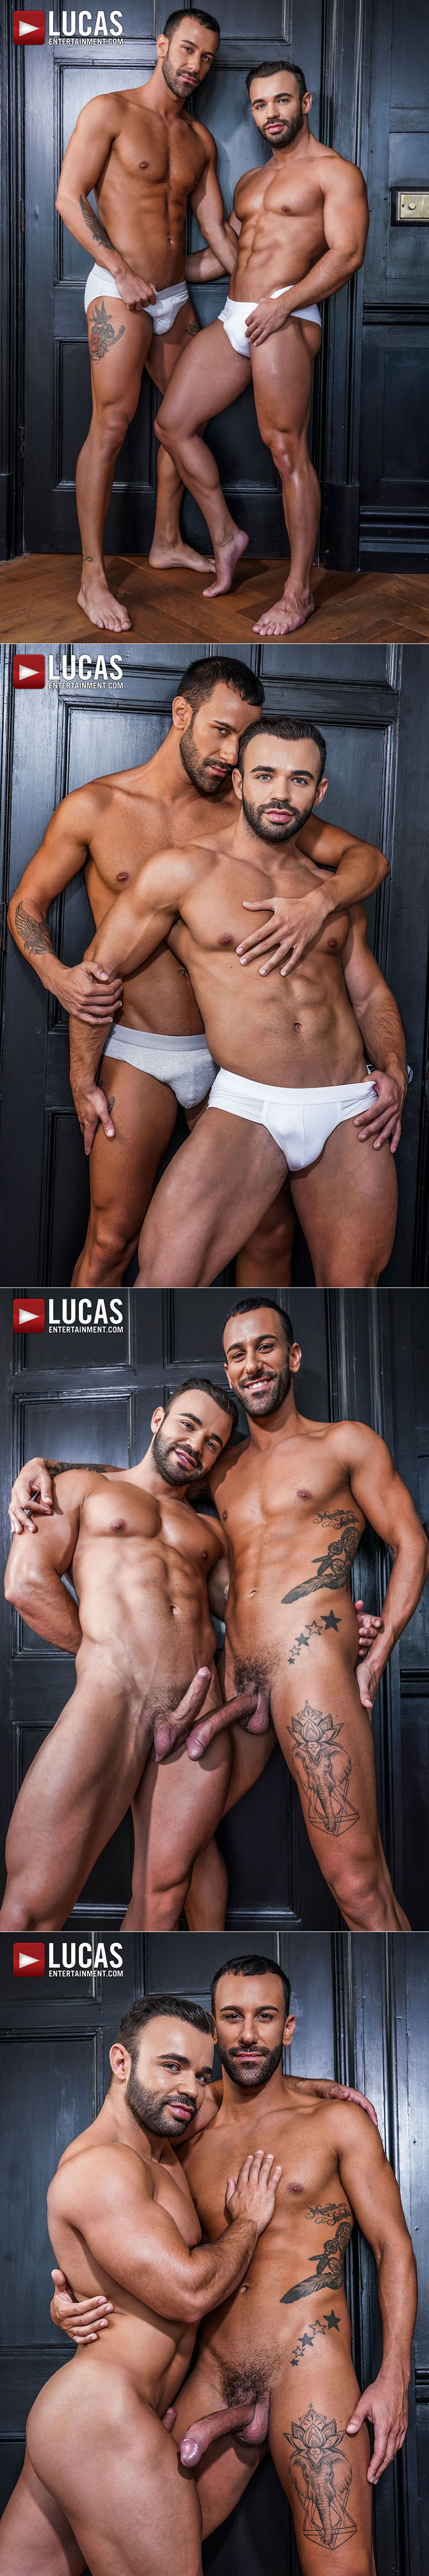 Lucas Entertainment: Gustavo Cruz pounds Sean Austin raw in "Brutalizing Some Butt"